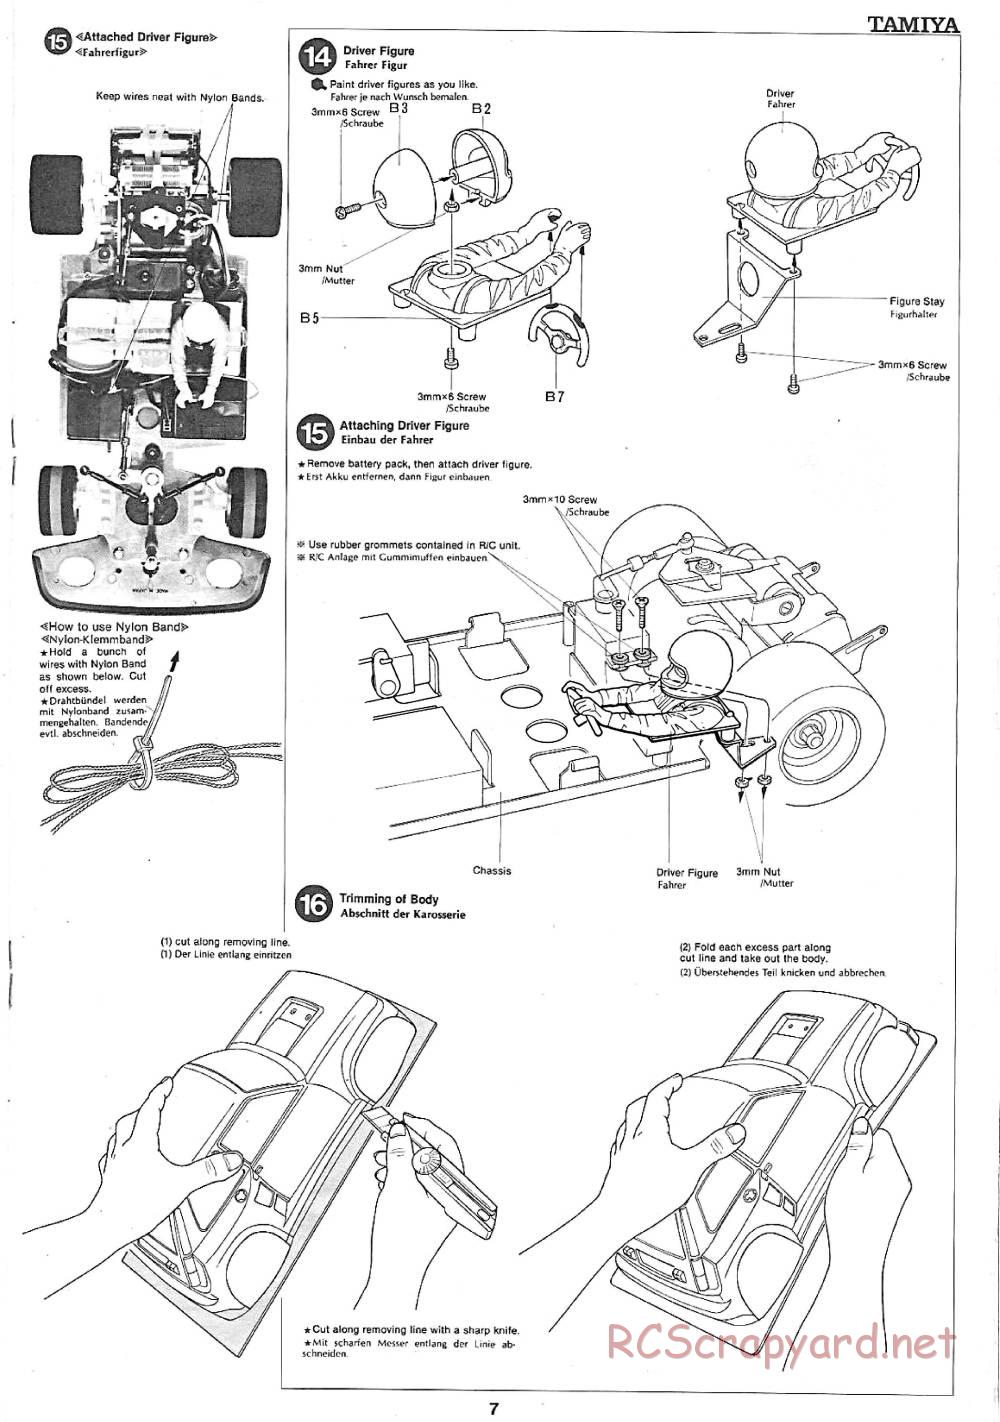 Tamiya - Renault 5 Turbo (CS) - 58026 - Manual - Page 7